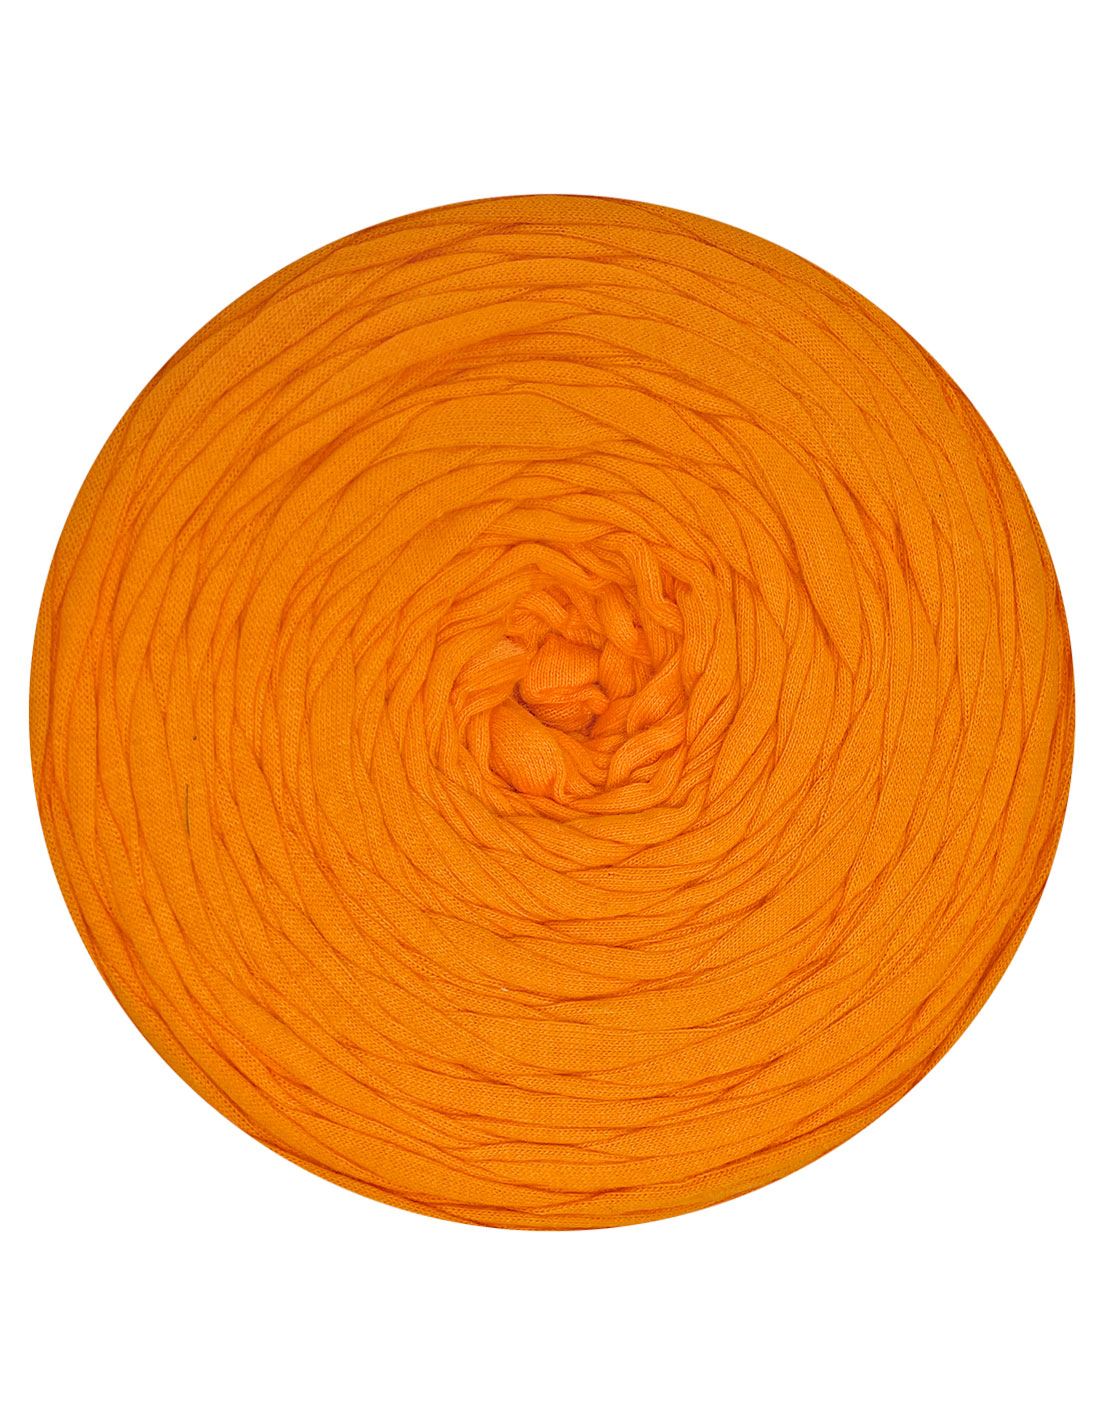 Clementine orange t-shirt yarn (100-120m)